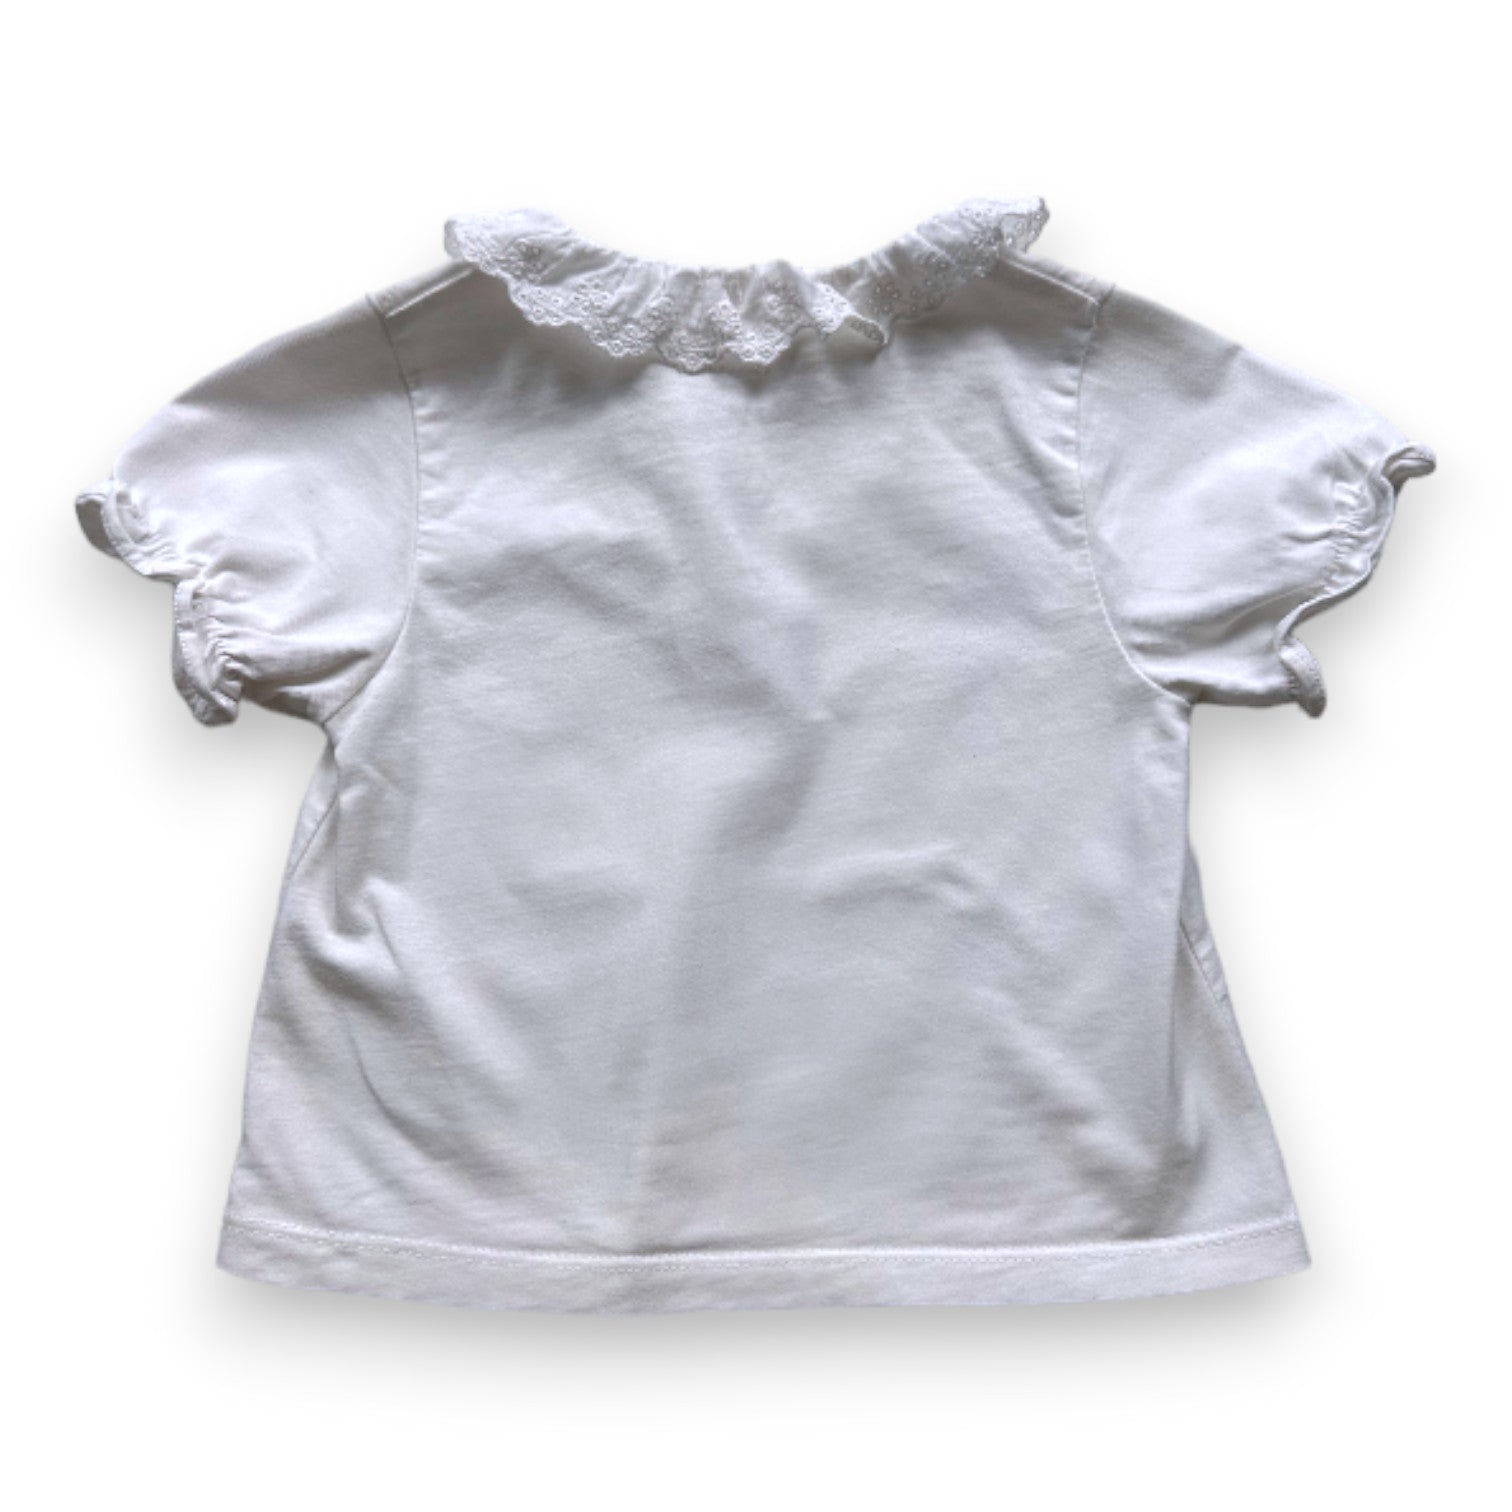 Cyrillus - T-shirt blanc avec col en dentelle - 2 ans